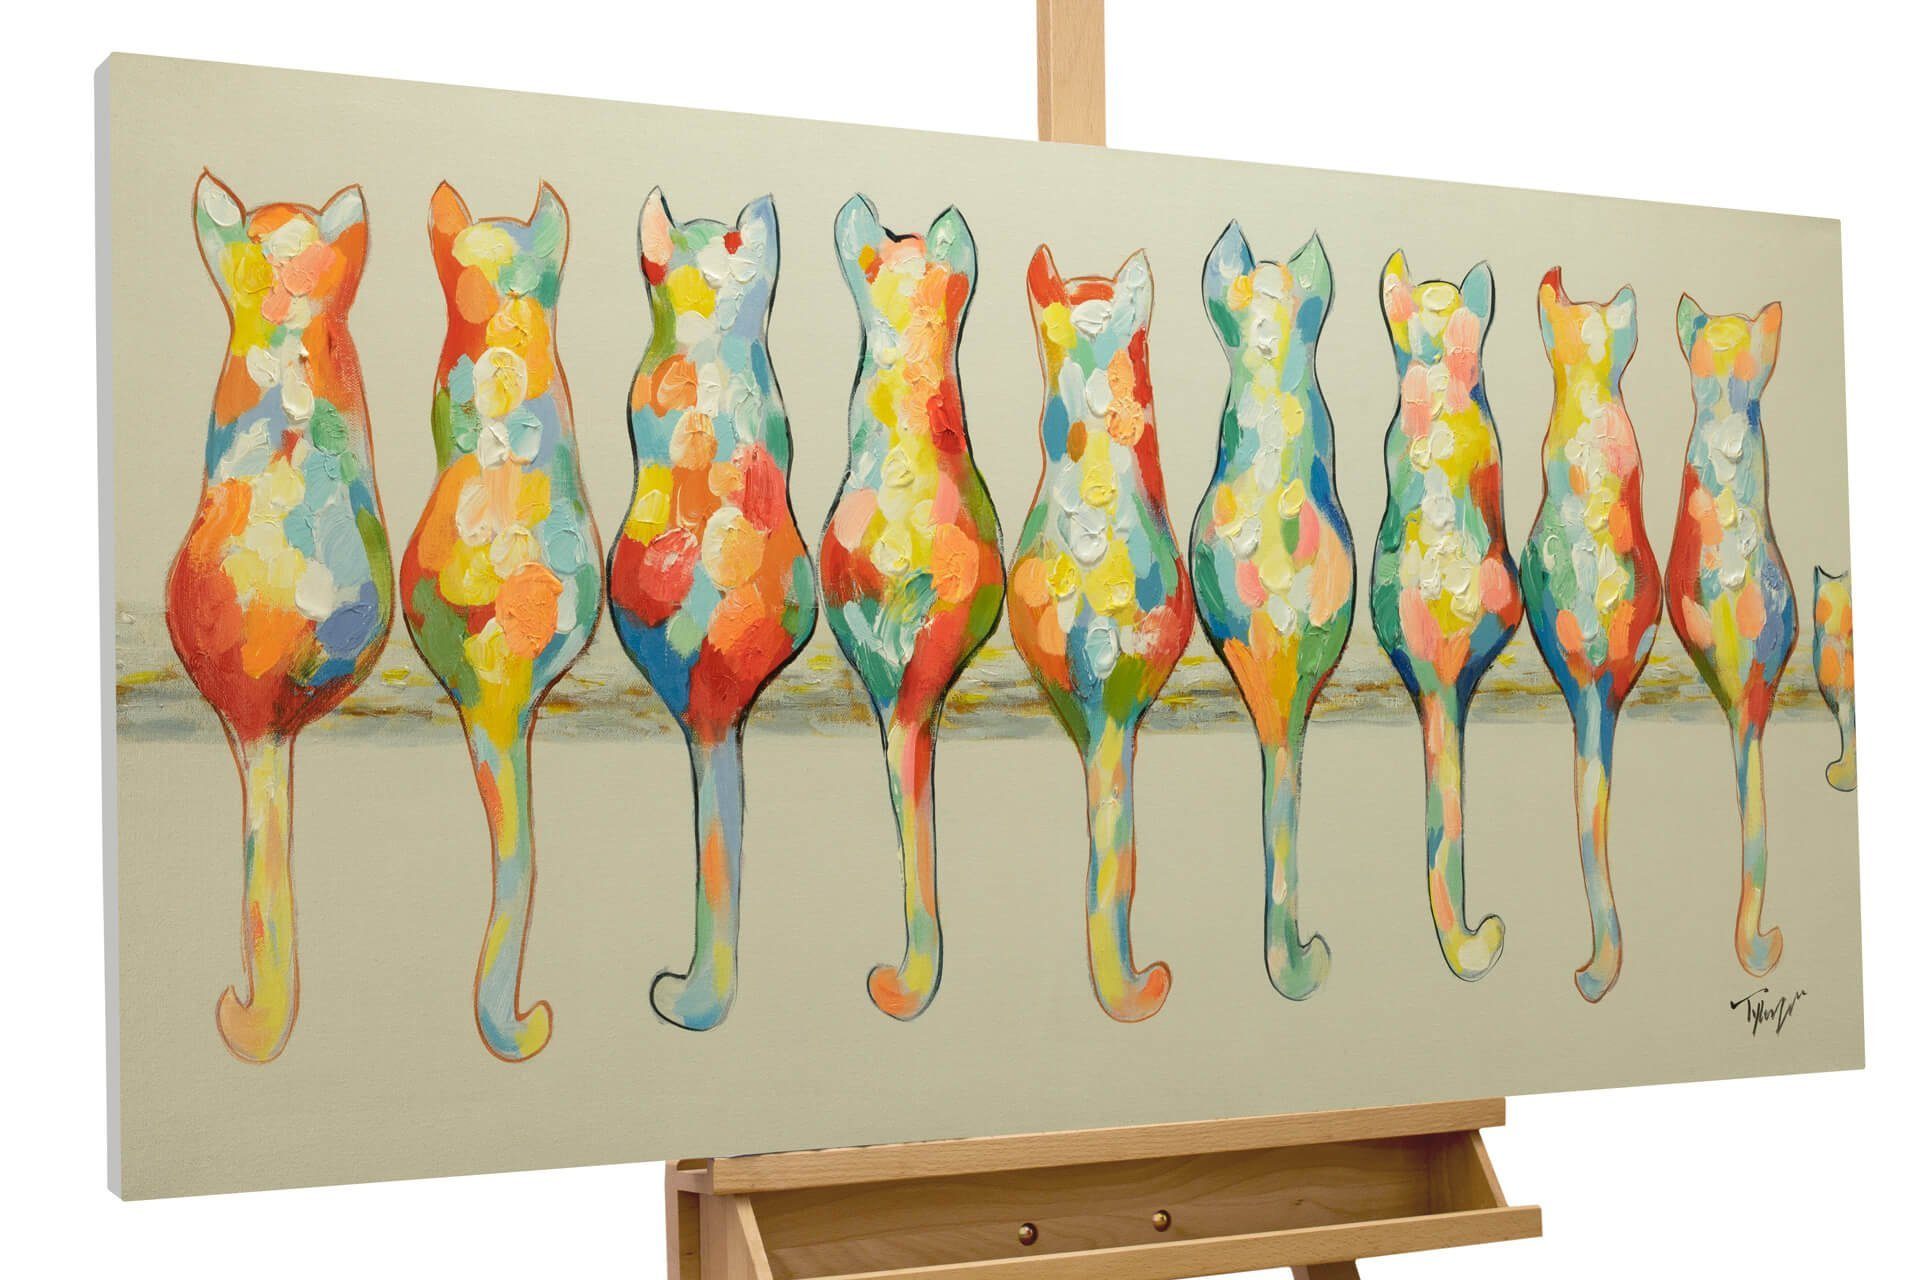 KUNSTLOFT Gemälde A Pride of Housecats 120x60 cm, Leinwandbild 100% HANDGEMALT Wandbild Wohnzimmer